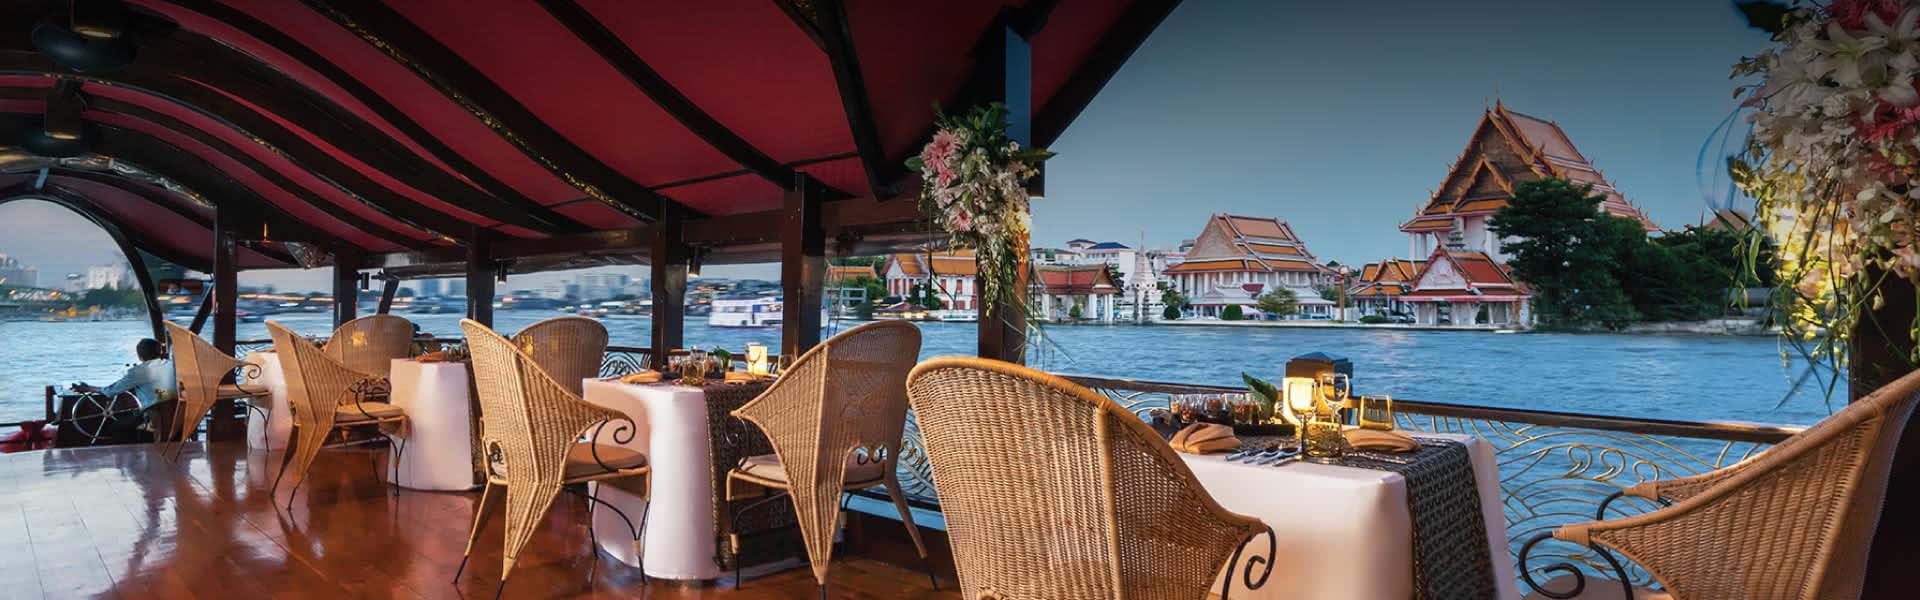 bangkok river dinner cruise tripadvisor